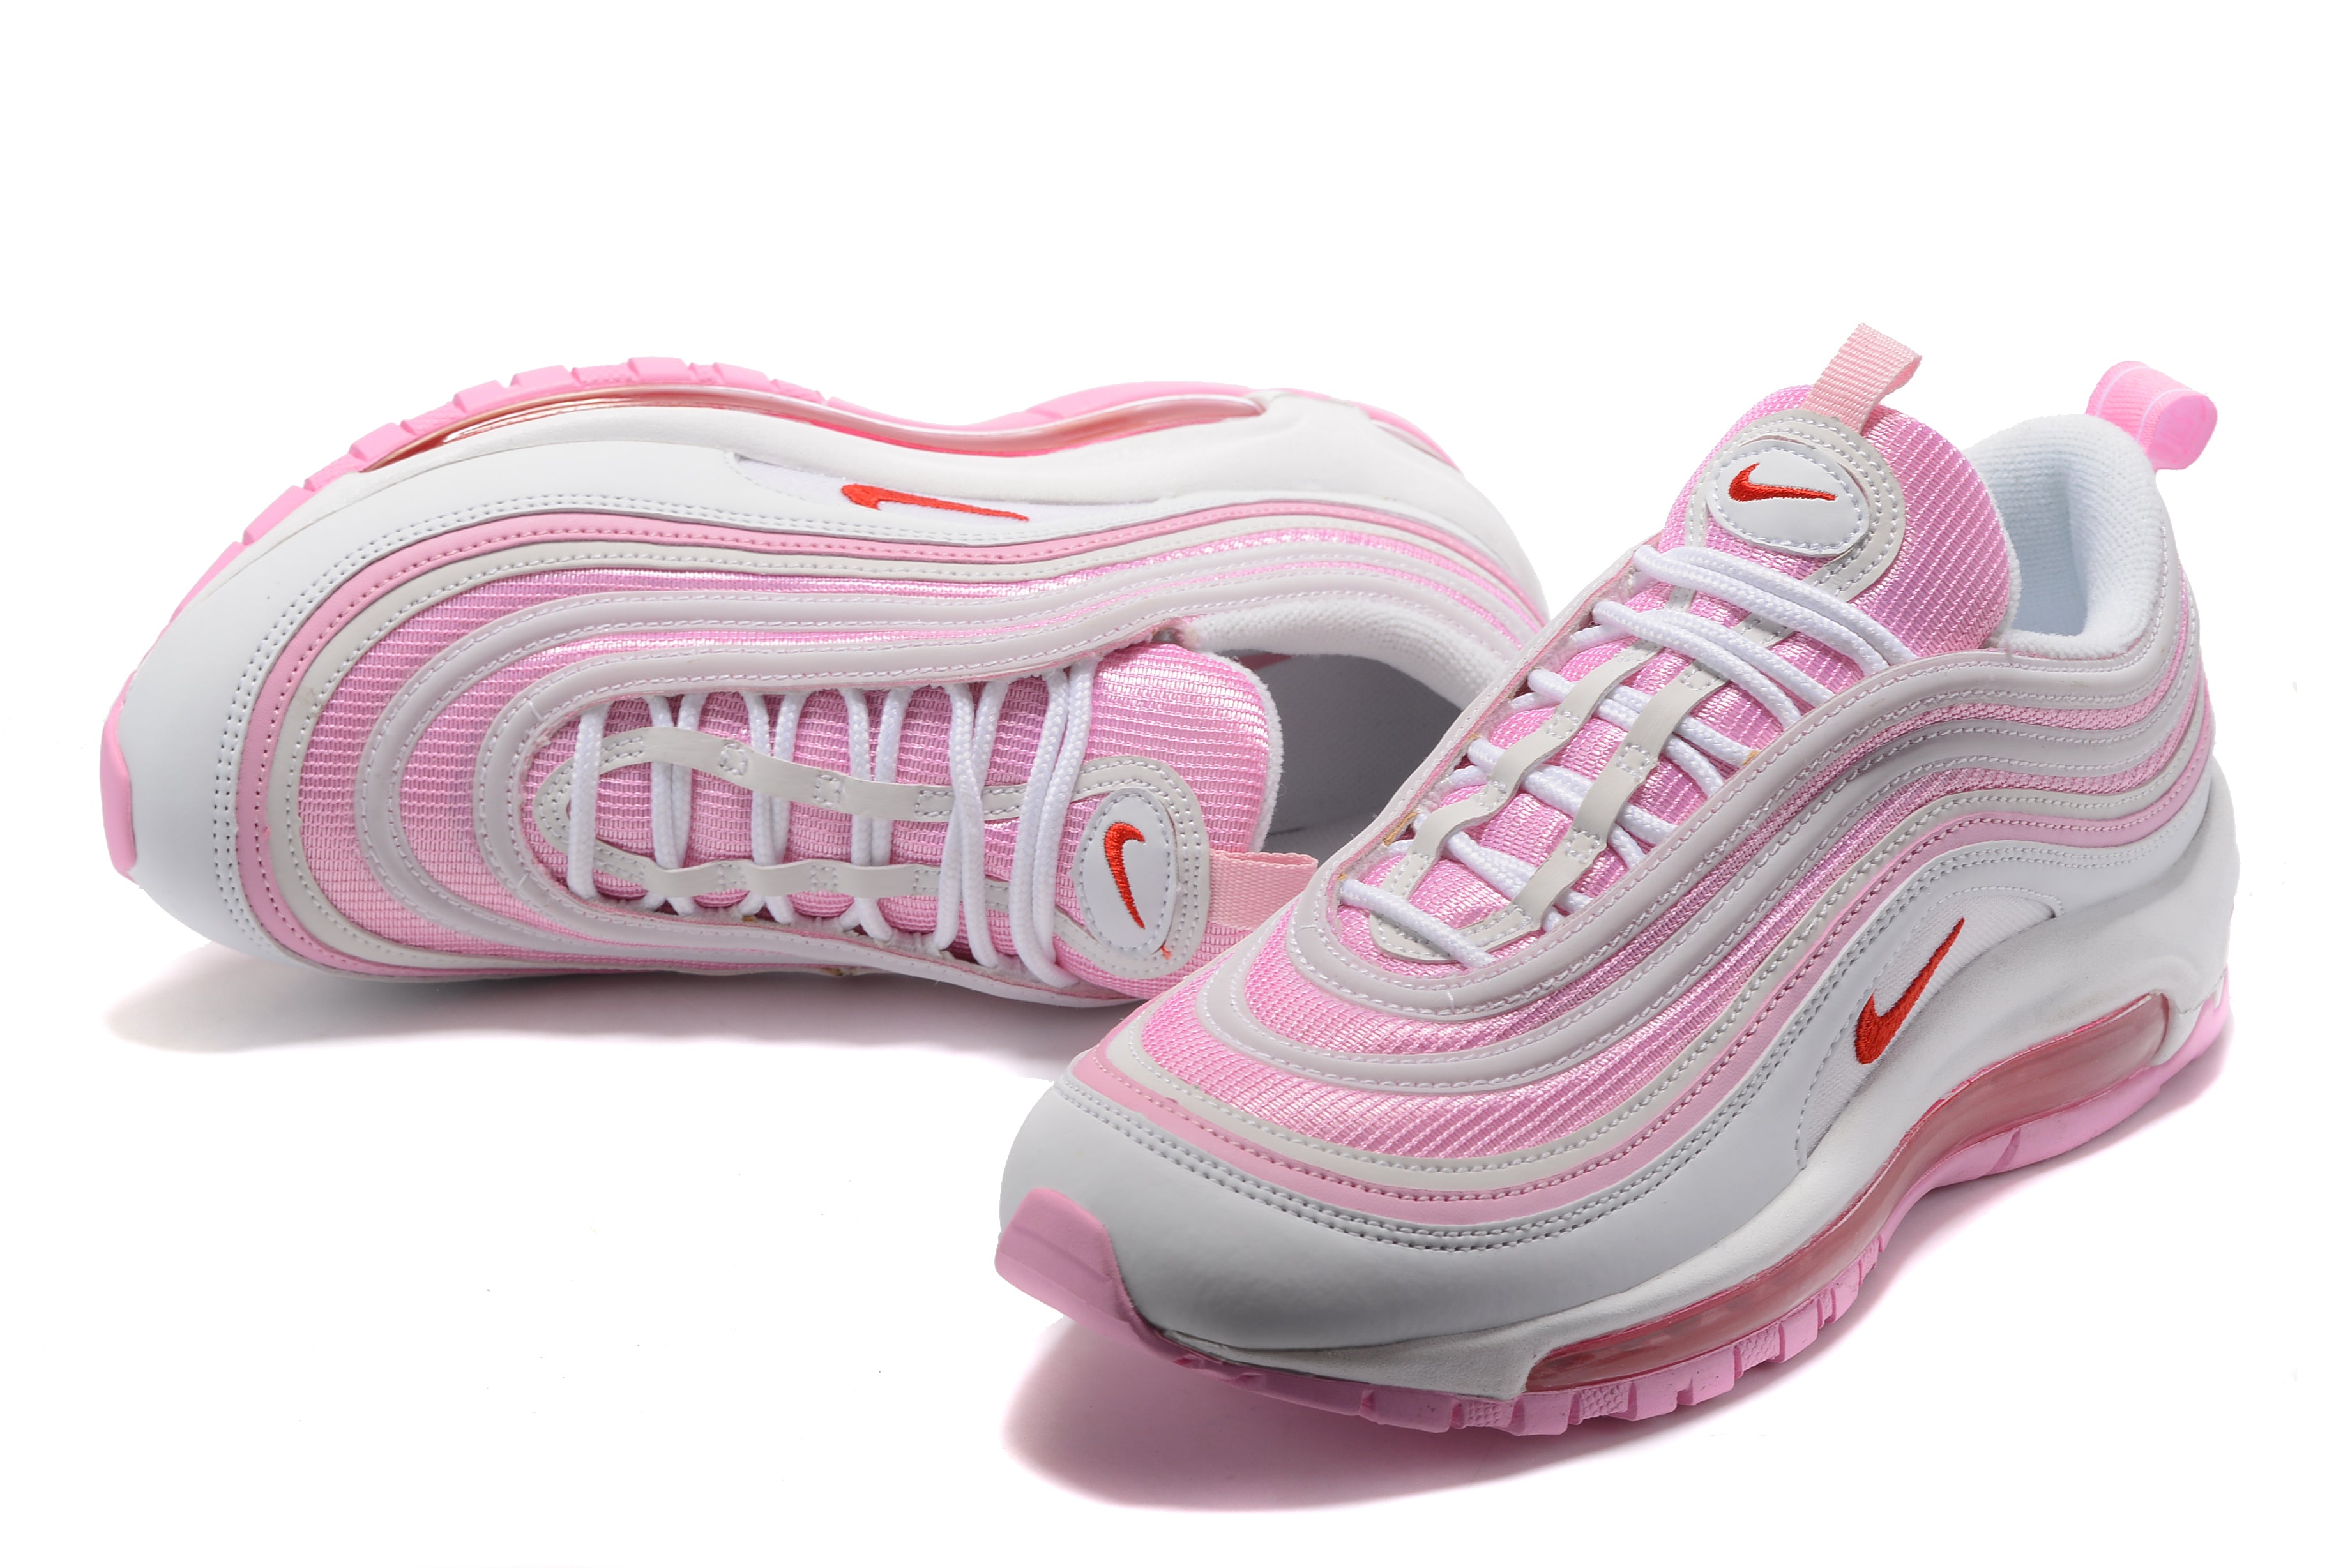 Nike Air Max 97 "Pink & White"